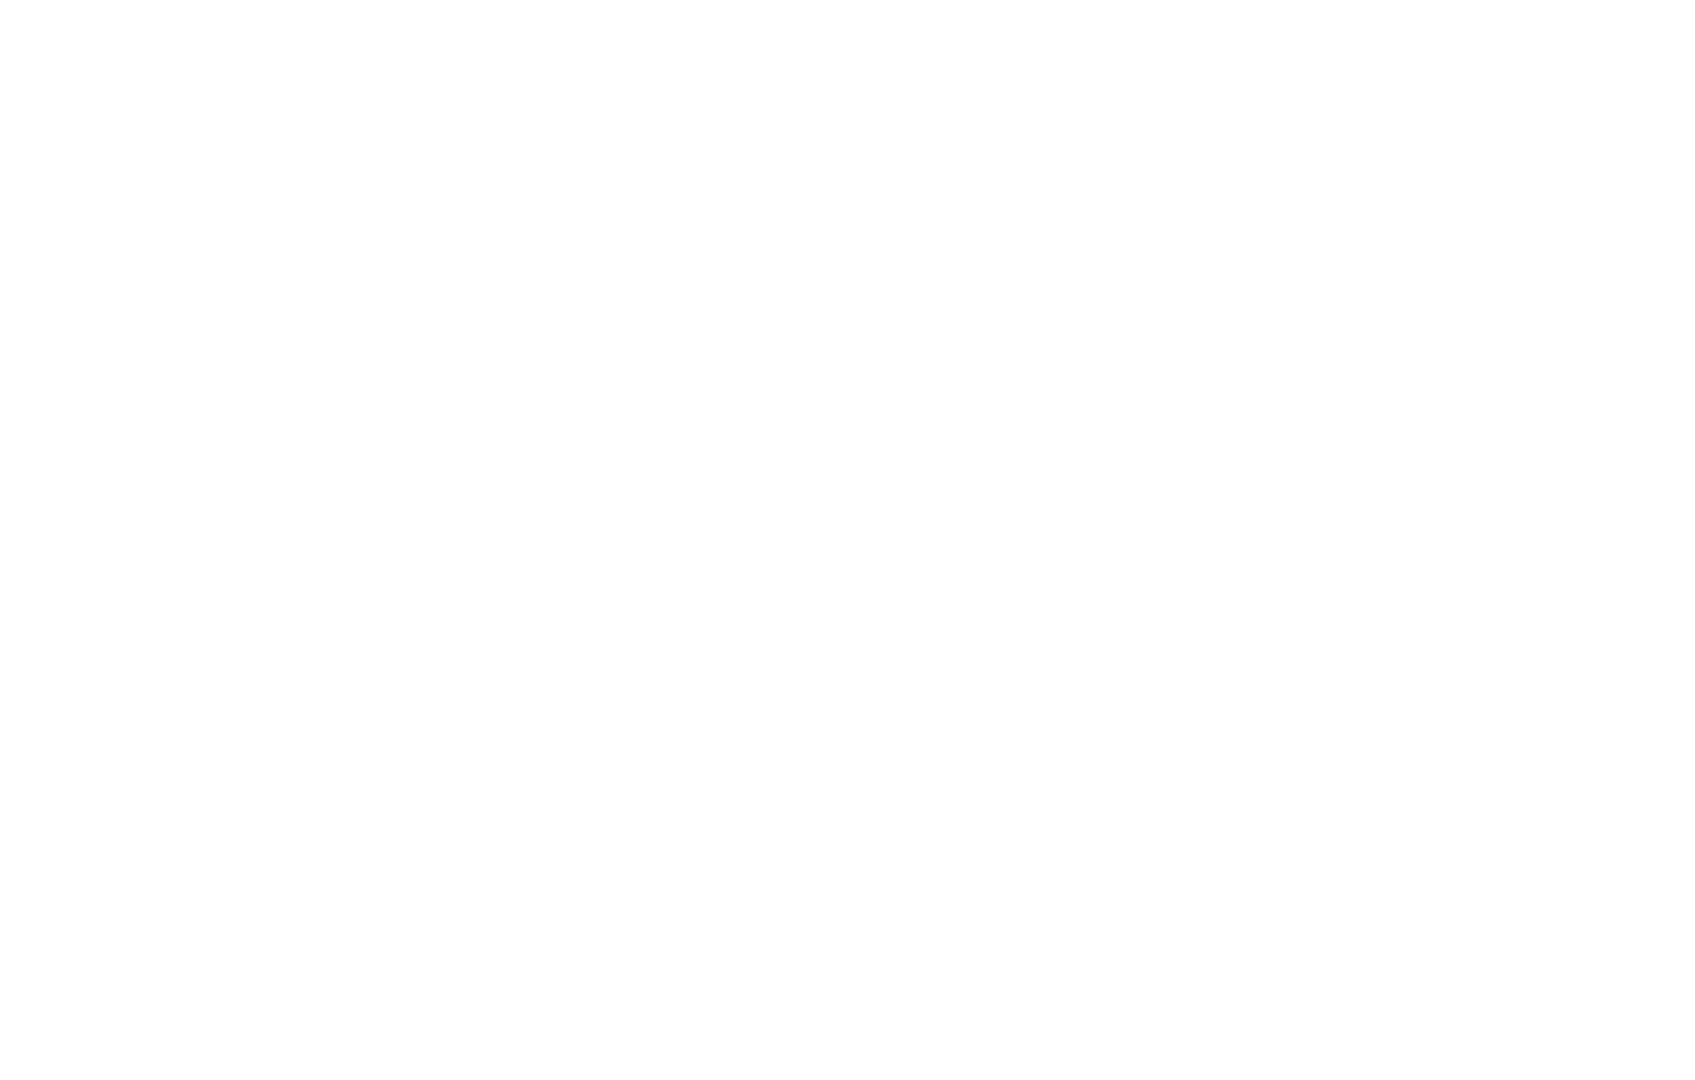 READERBOARDS